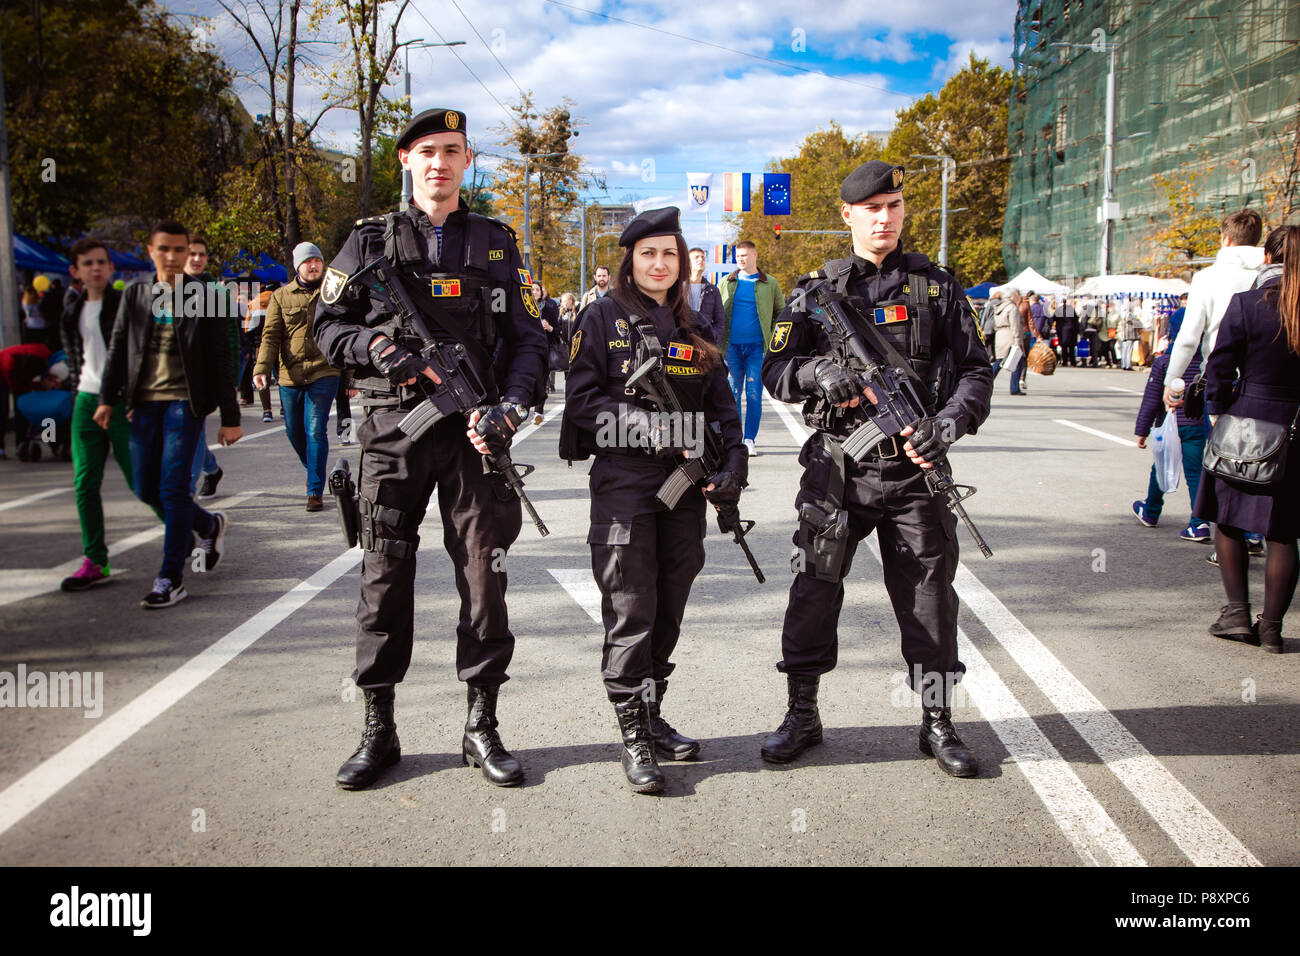 14 octomber 2017 three policemen with automatic rifles posing on holiday, Chisinau, Moldova Stock Photo